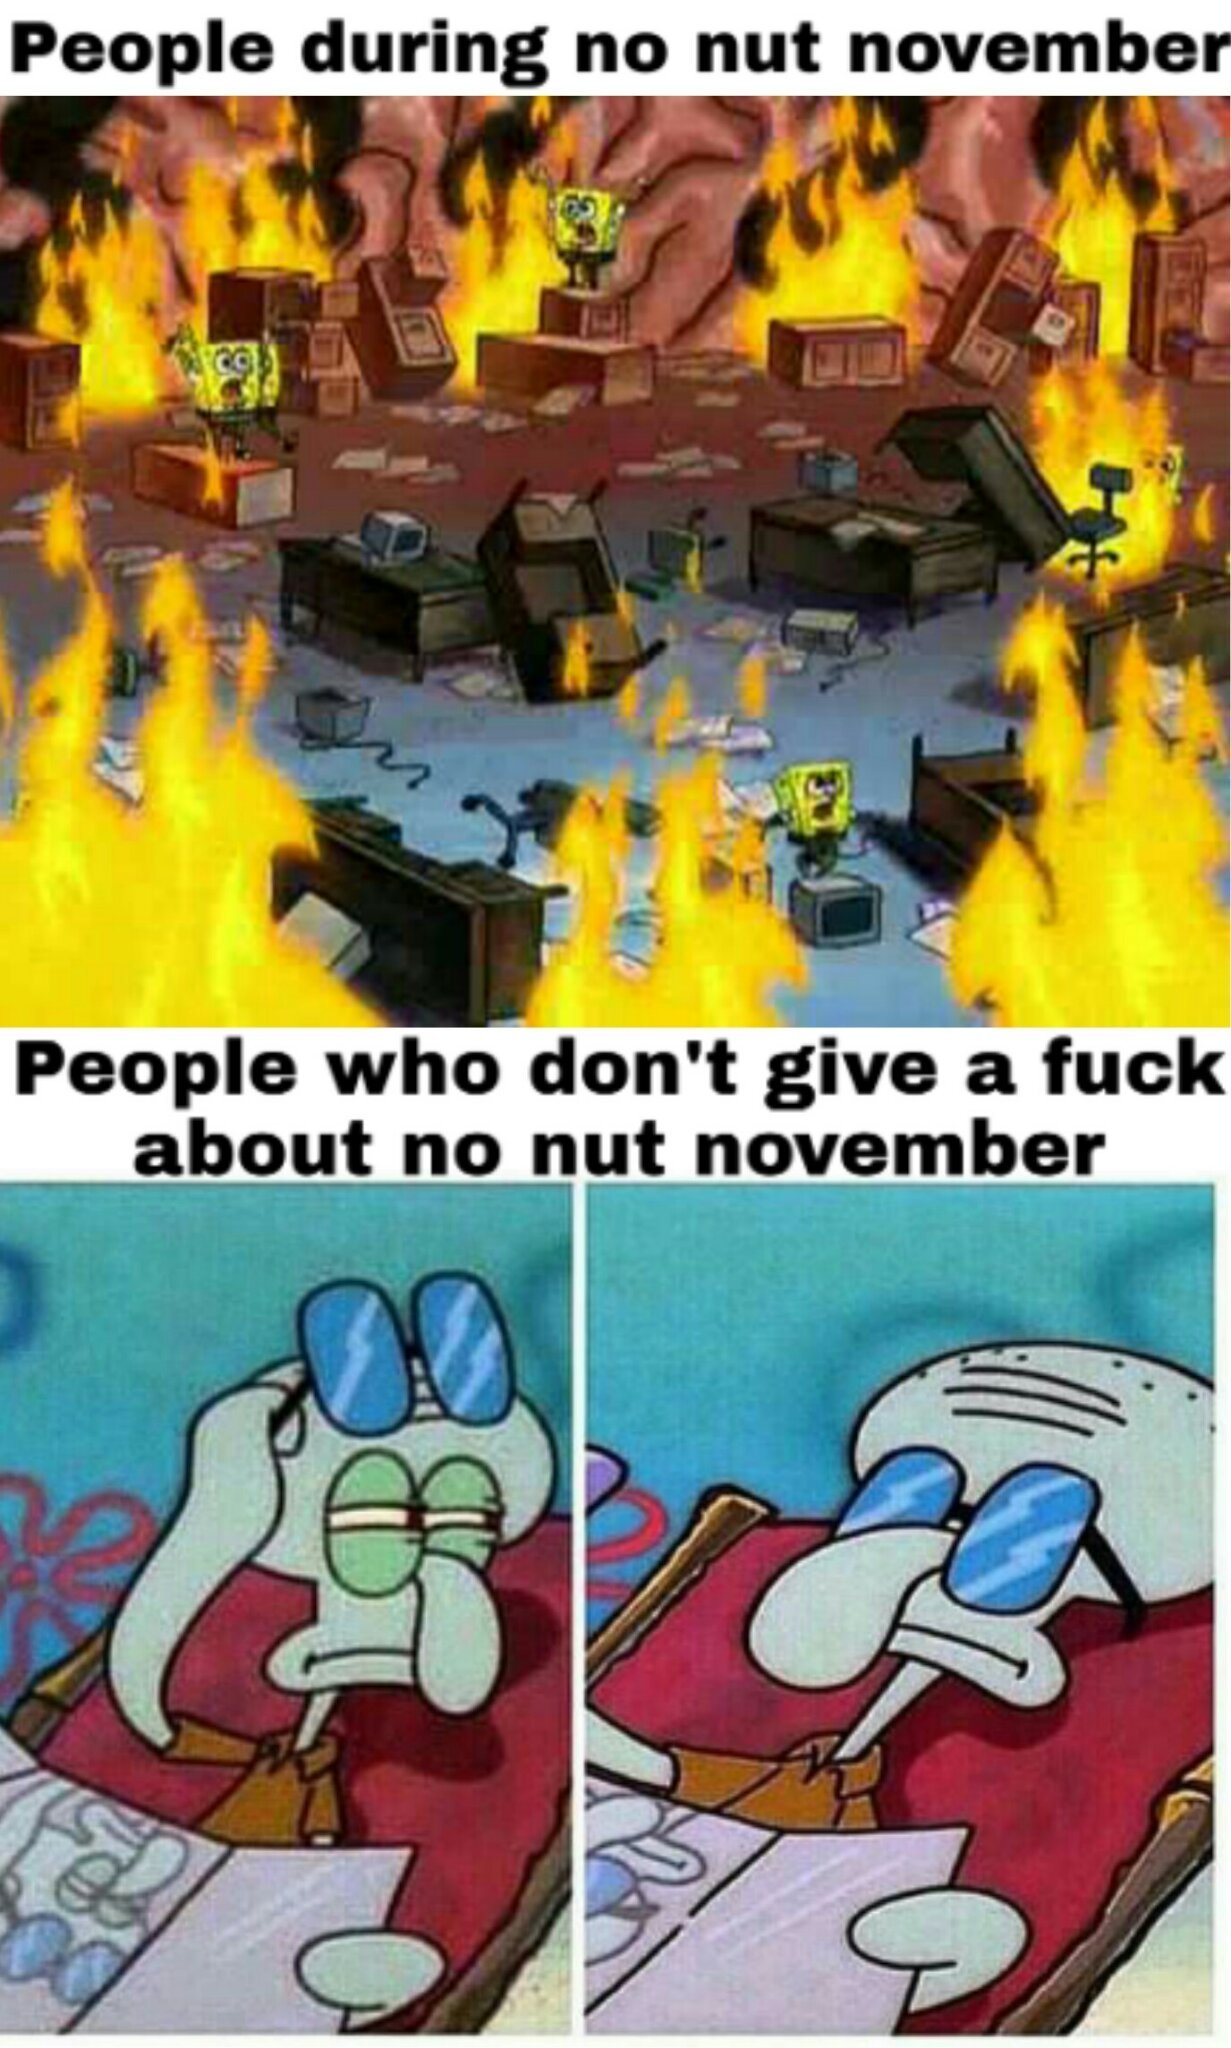 I really enjoy nutting during november - meme